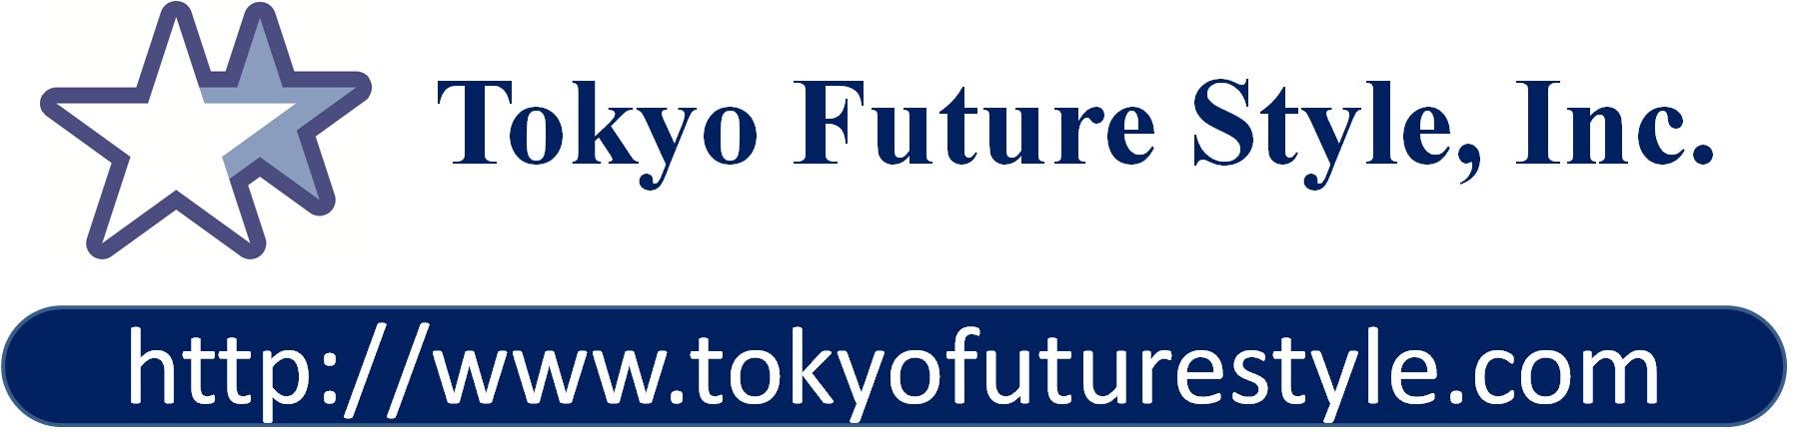 Tokyo Future Style, Inc-logo.jpg